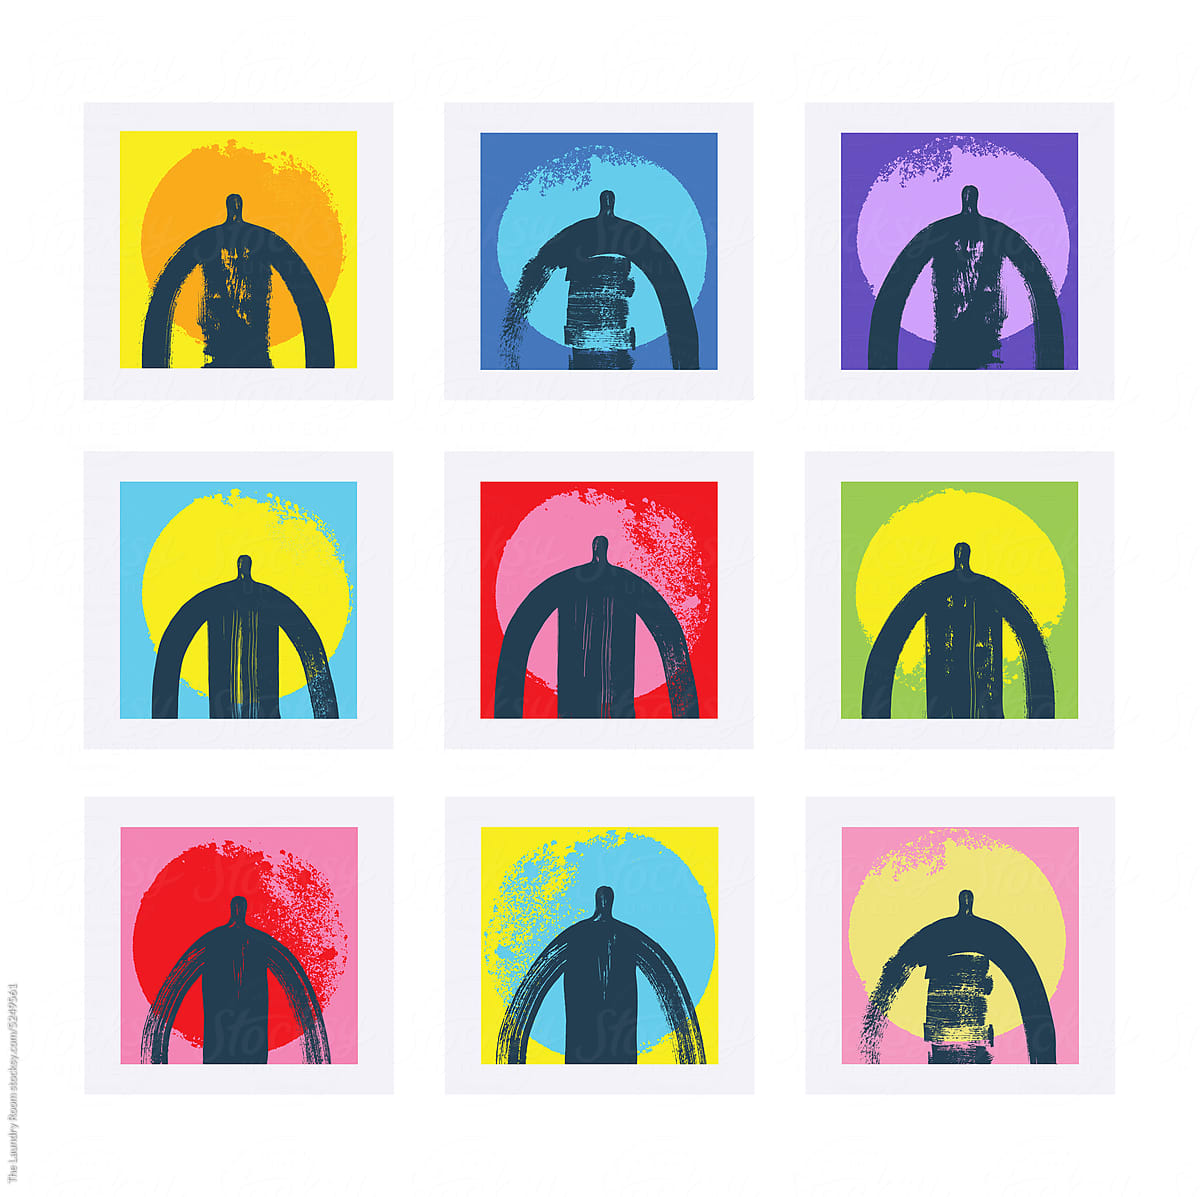 Nine Anonymous People. Upbeat Colorful Illustration